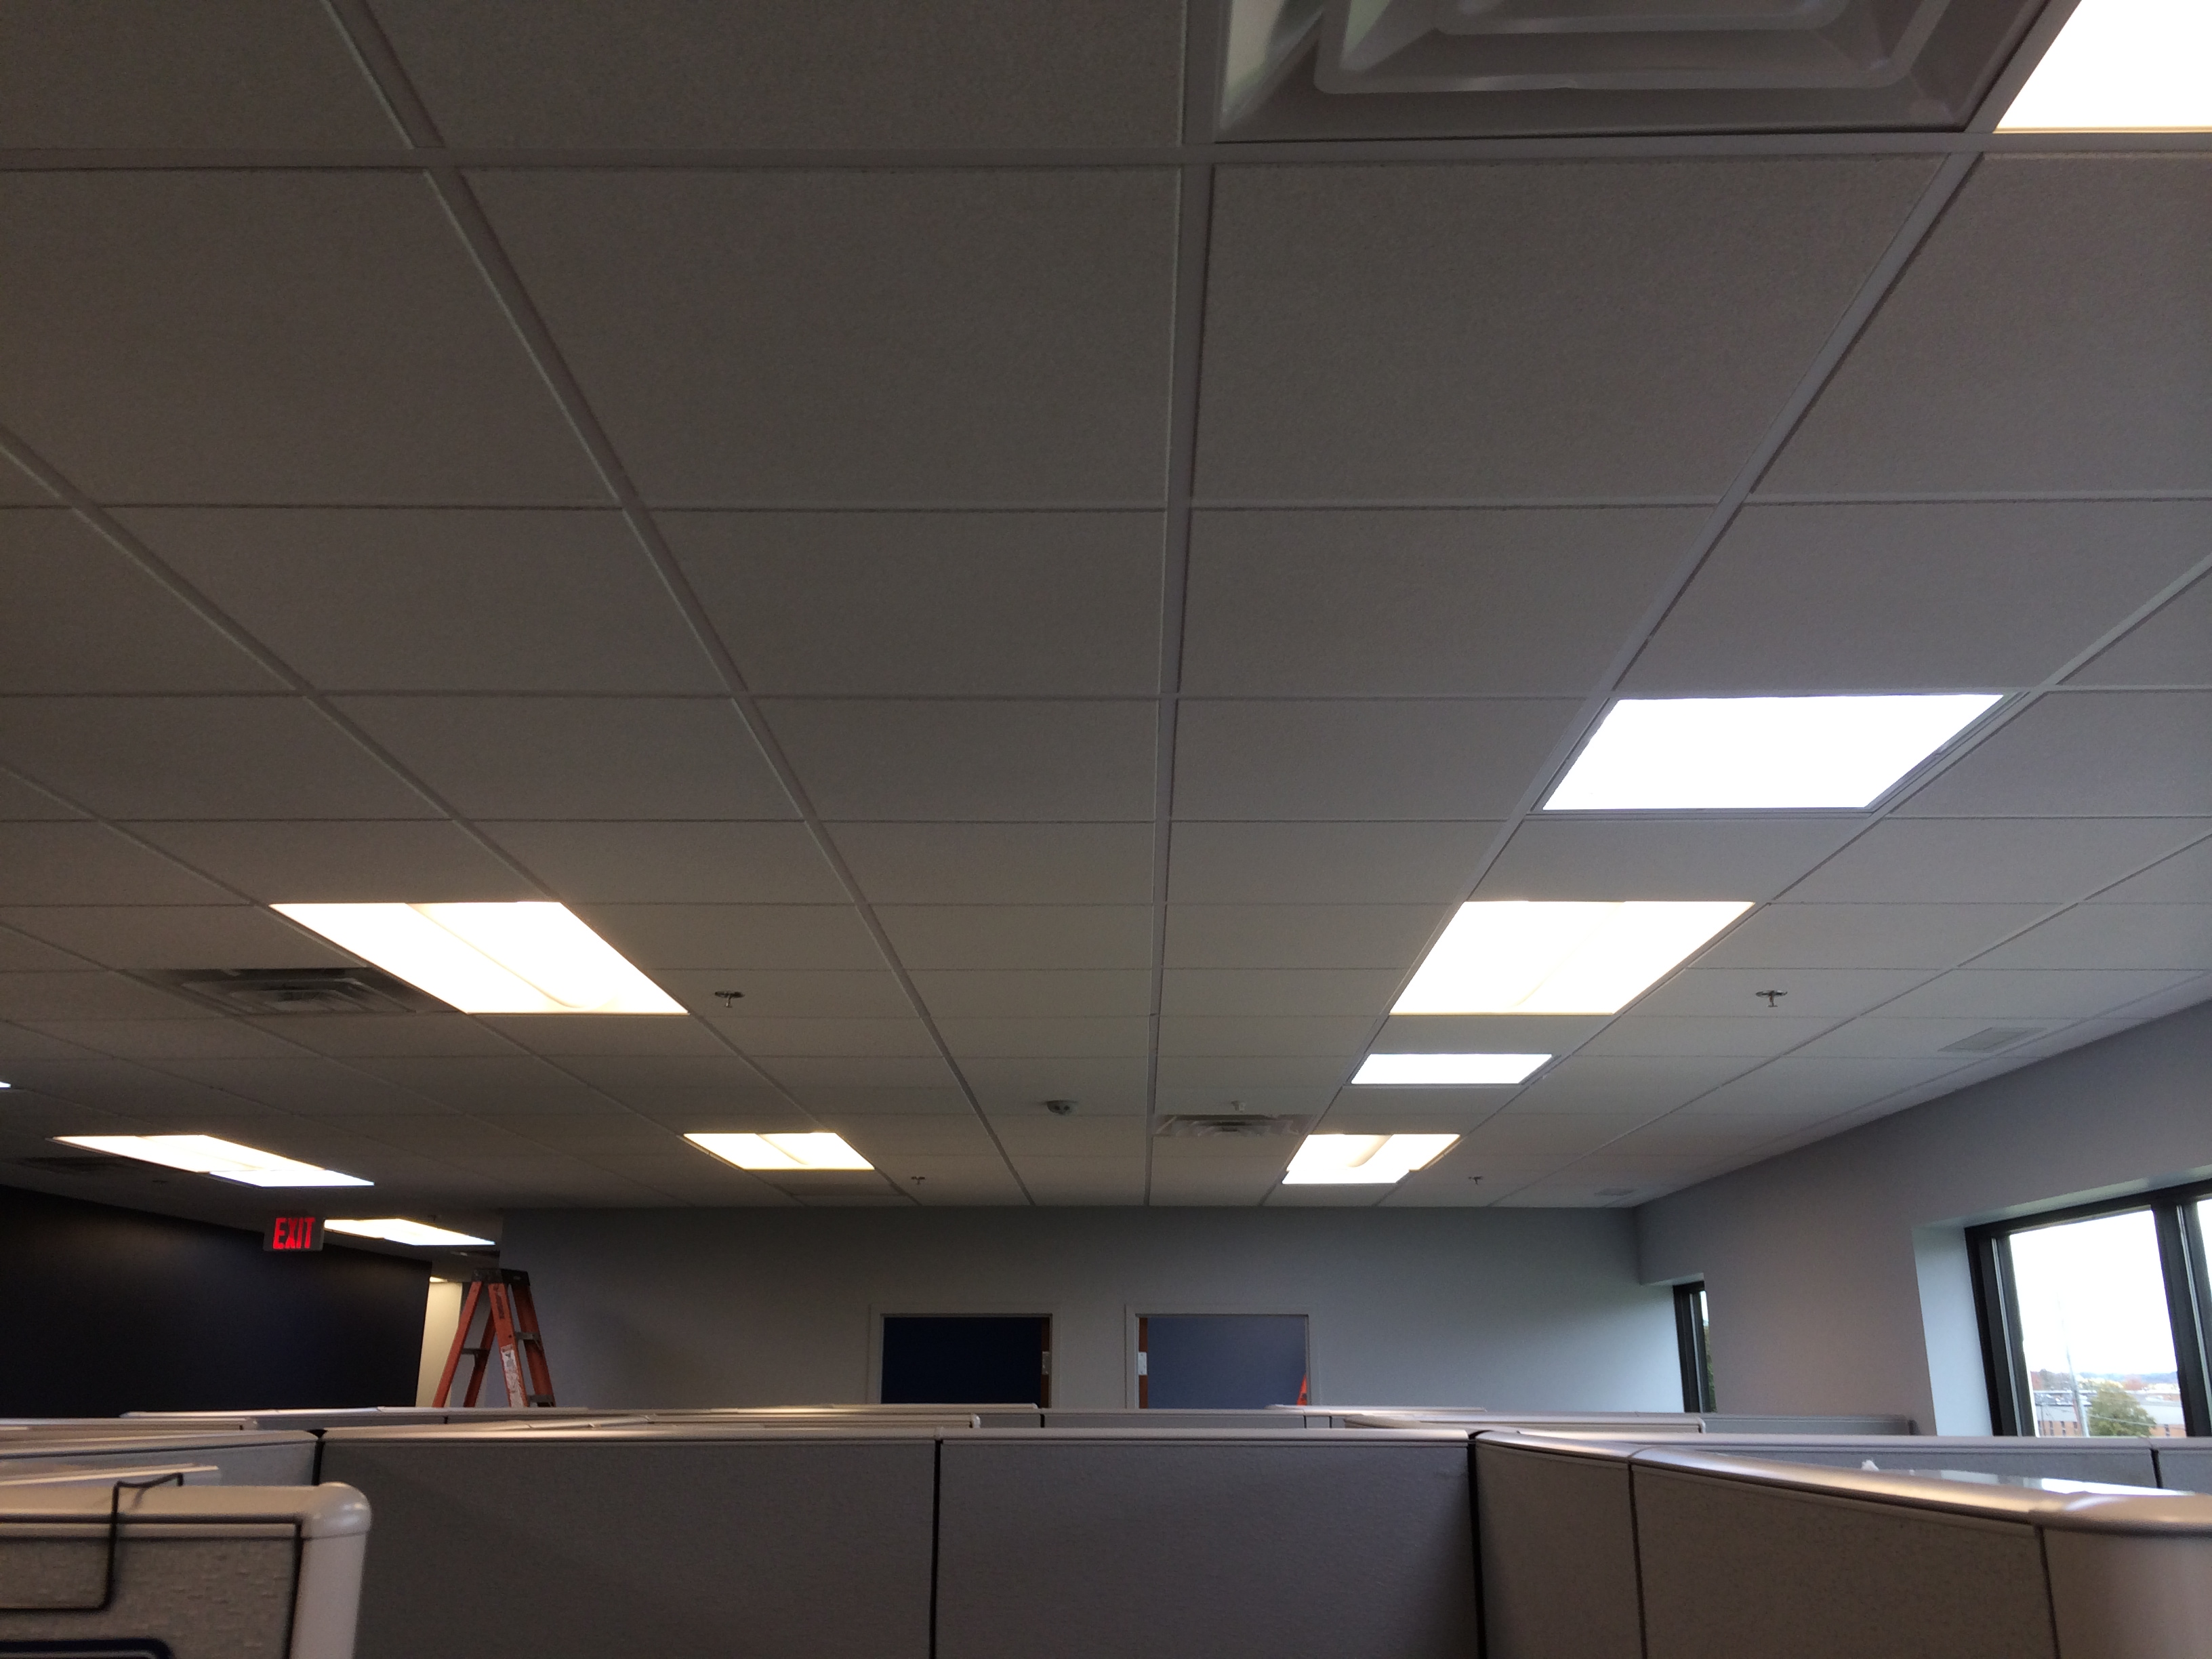 Work area with dimmable flourescent lights and tubular skylights